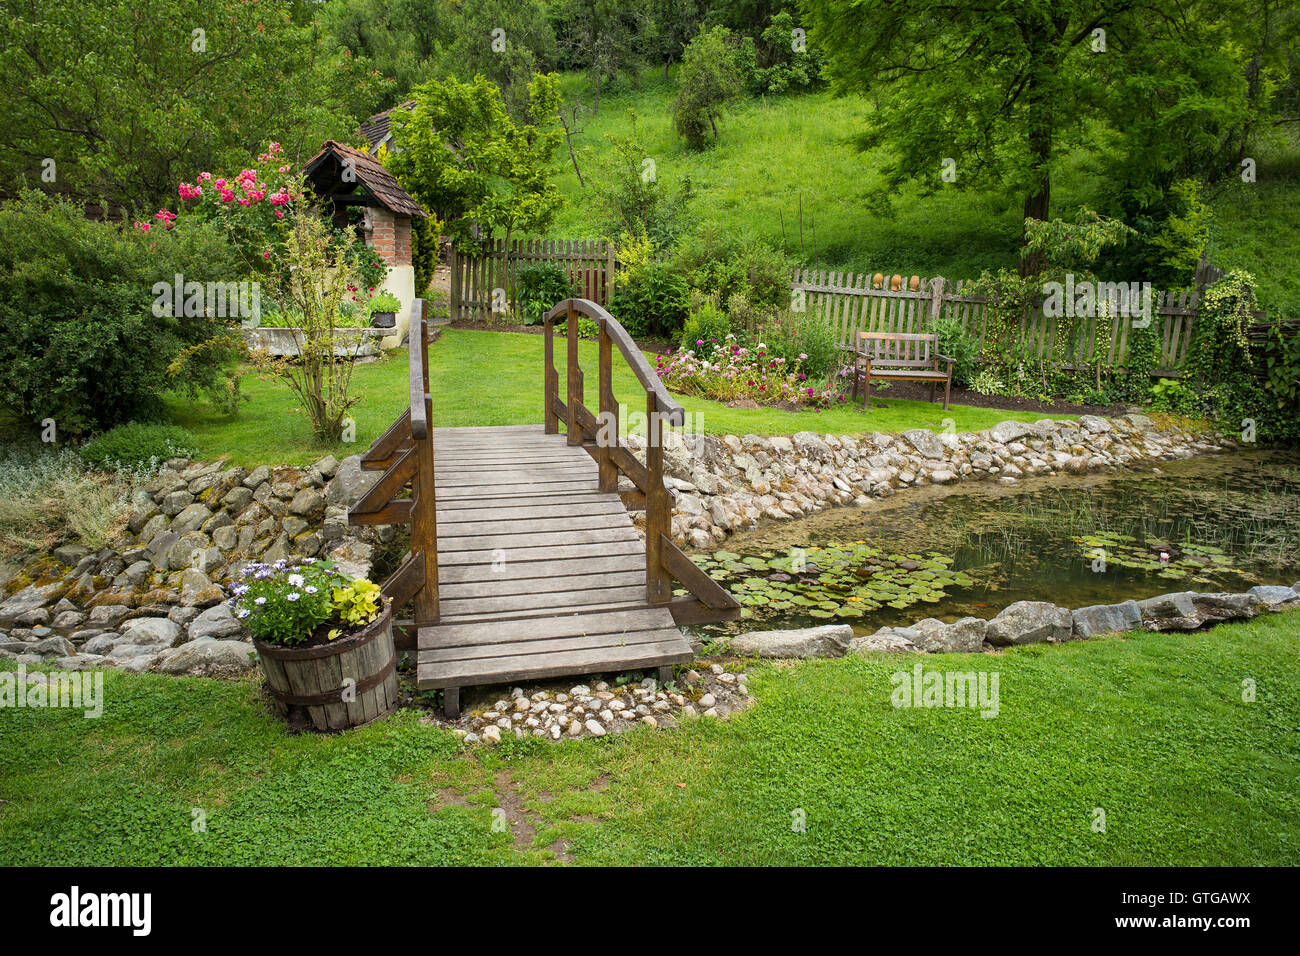 A wooden bridge over a pond in a garden in summer Stock Photo